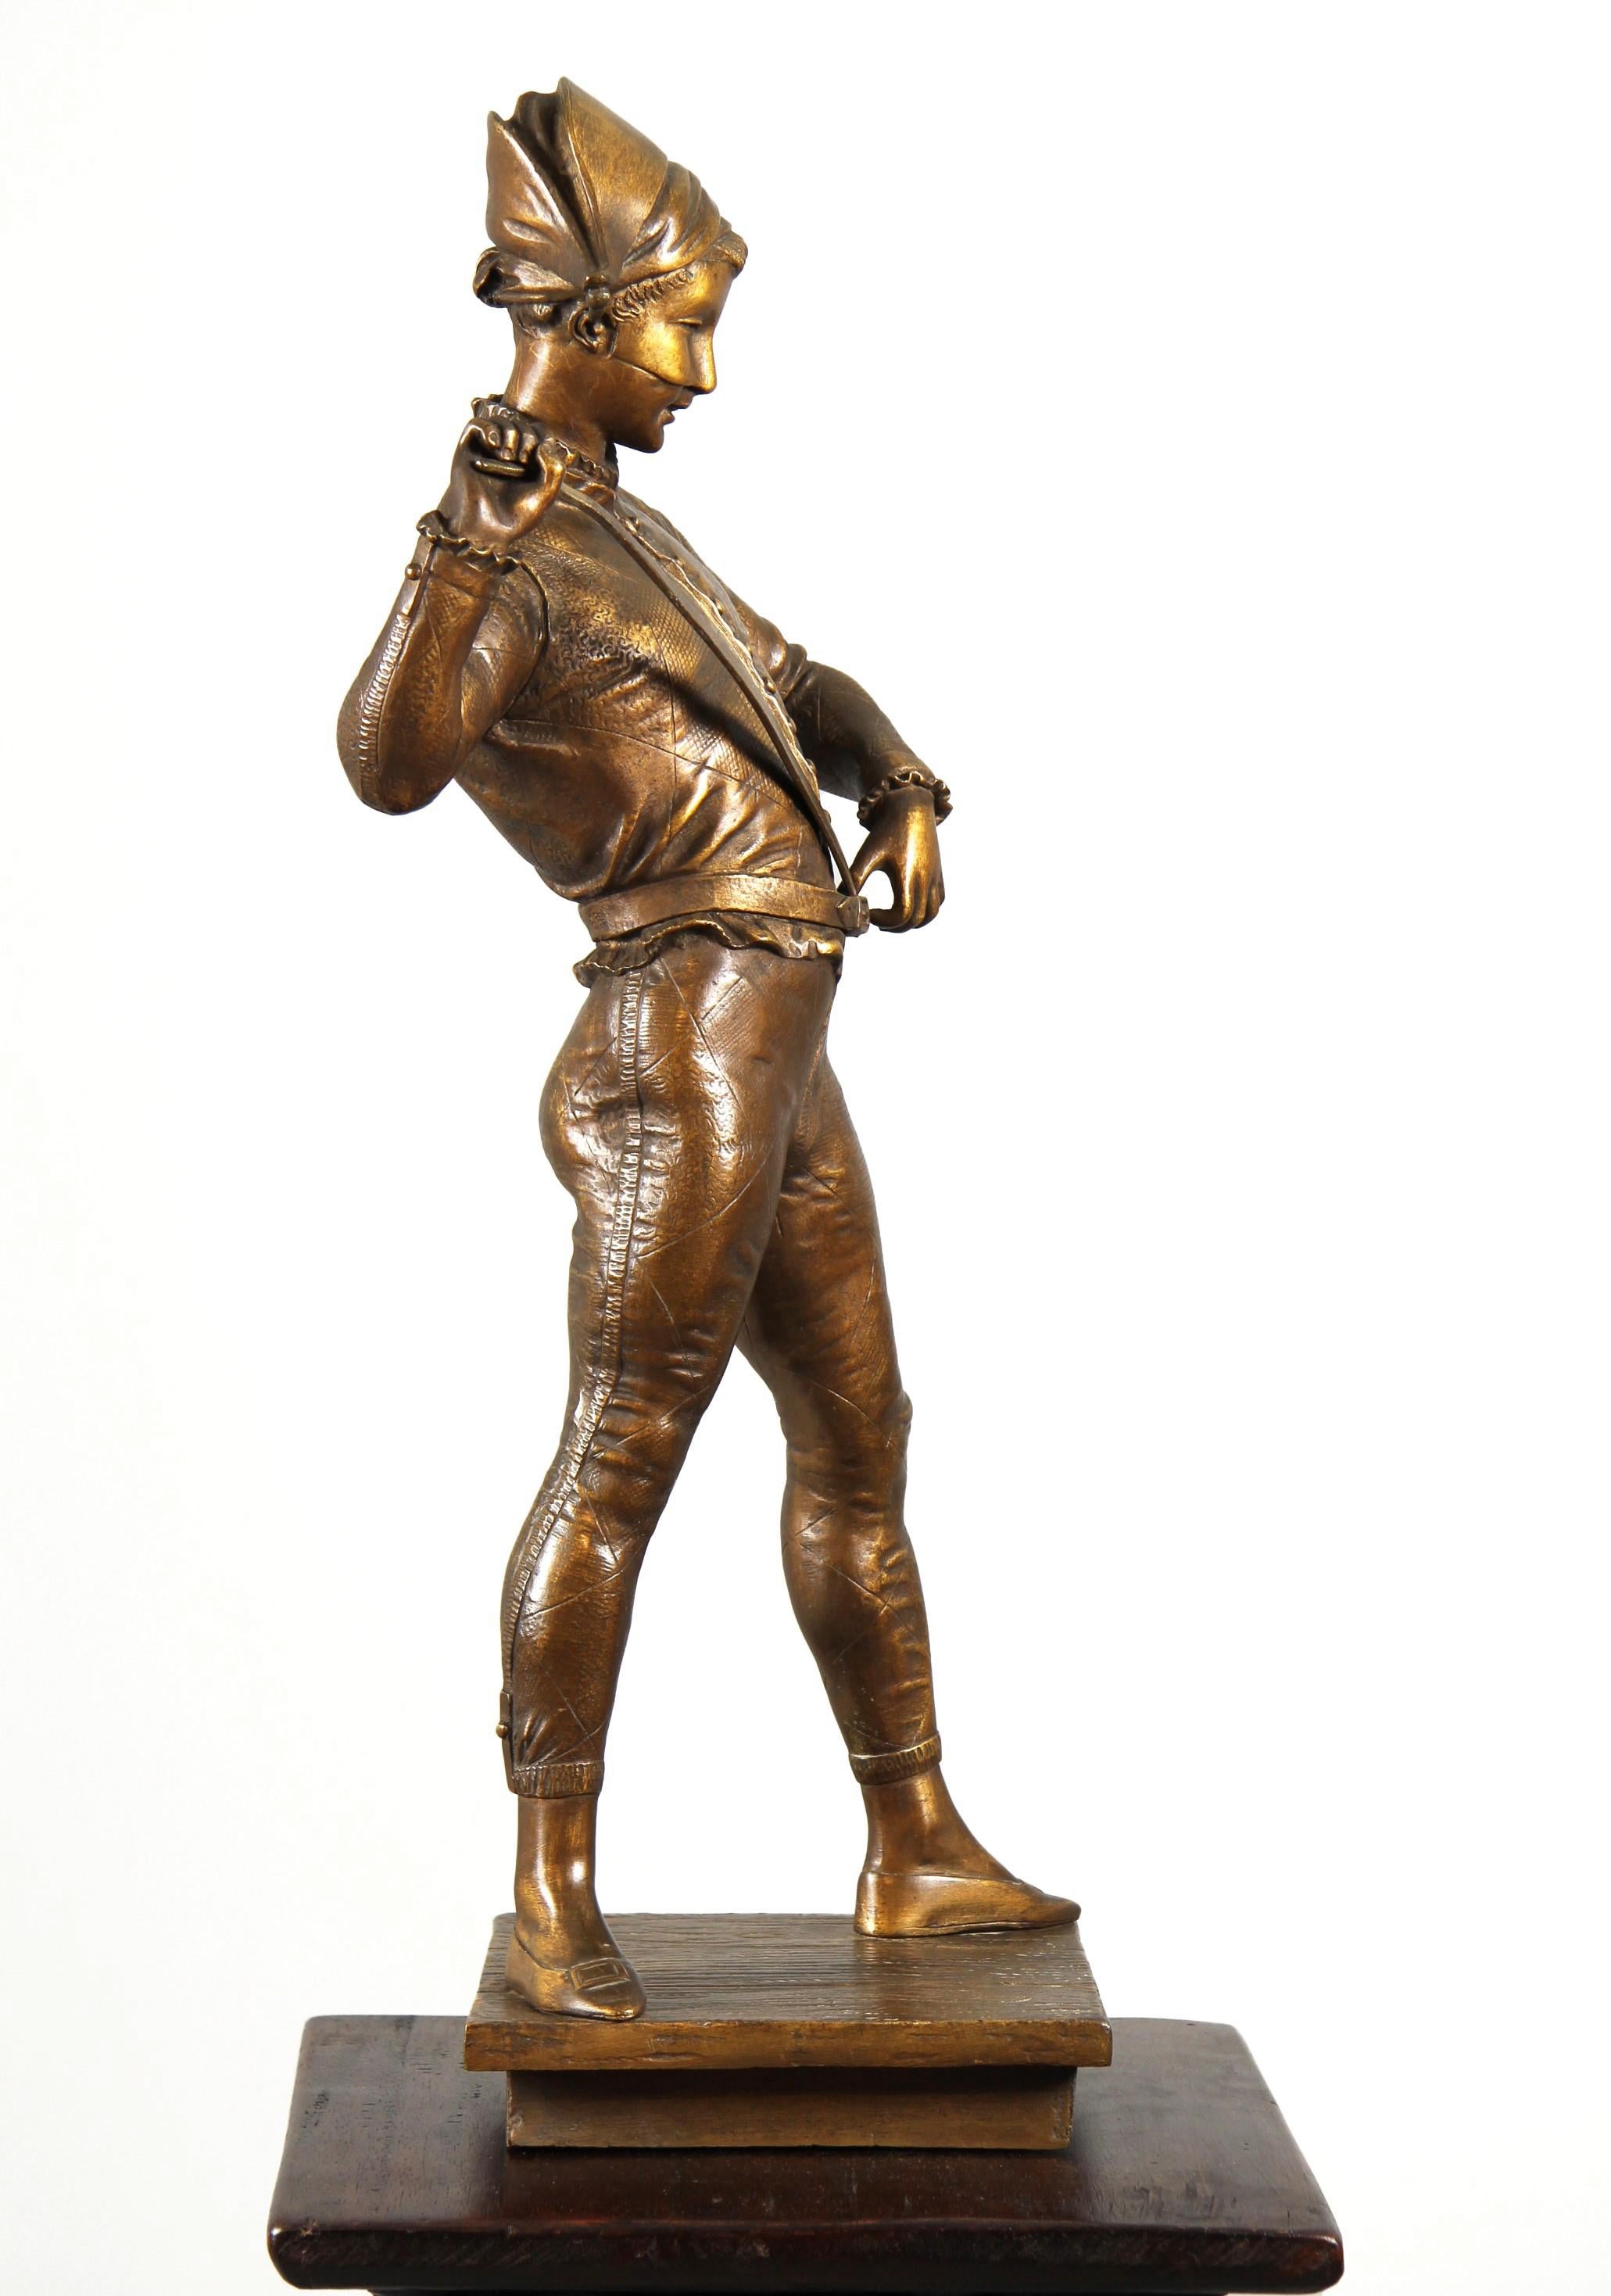 French Paul Dubois 1827-1905, Harlequin Sculpture, Bronze, France, circa 1880